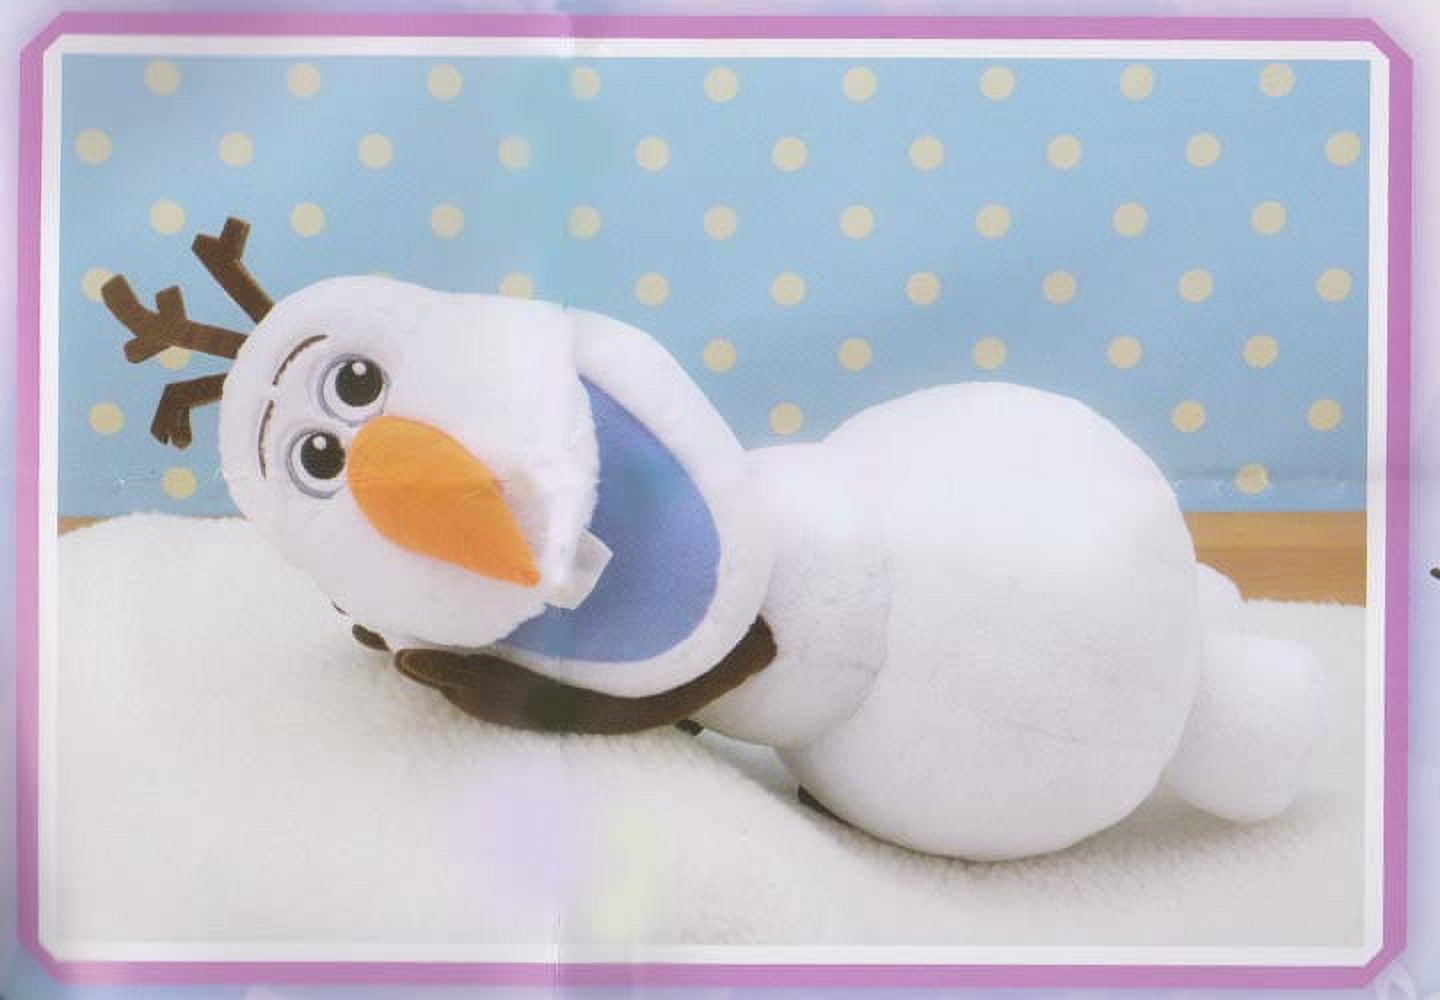 Disney Frozen Olaf Plush Stuffed Animal Jumbo Large 24